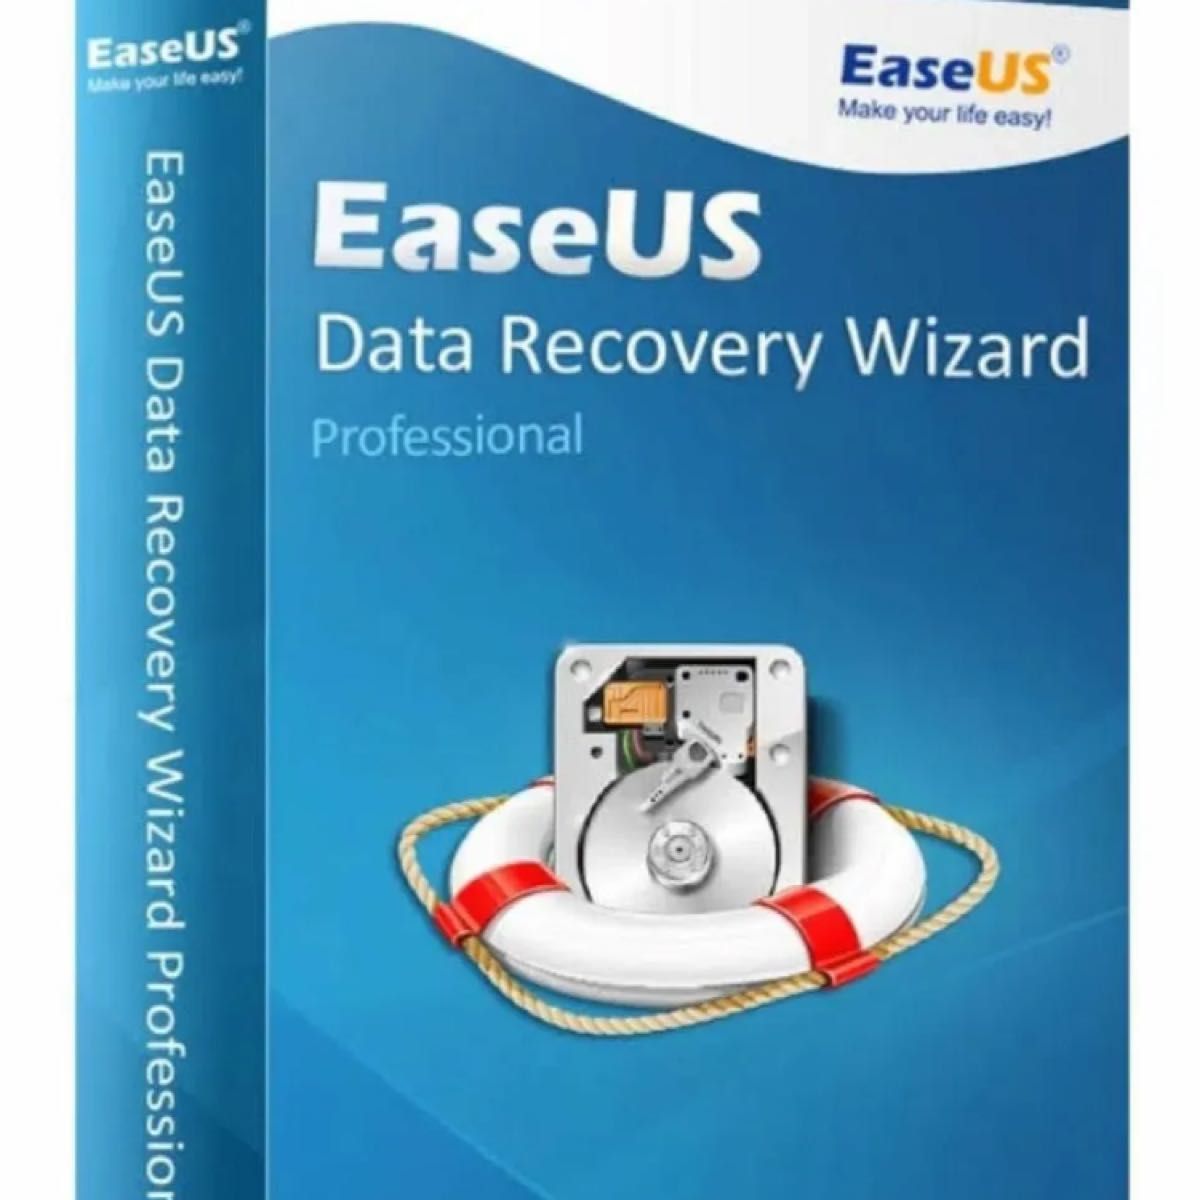 EaseUS Data Recovery Wizard Technician v17 Windows 日本語　